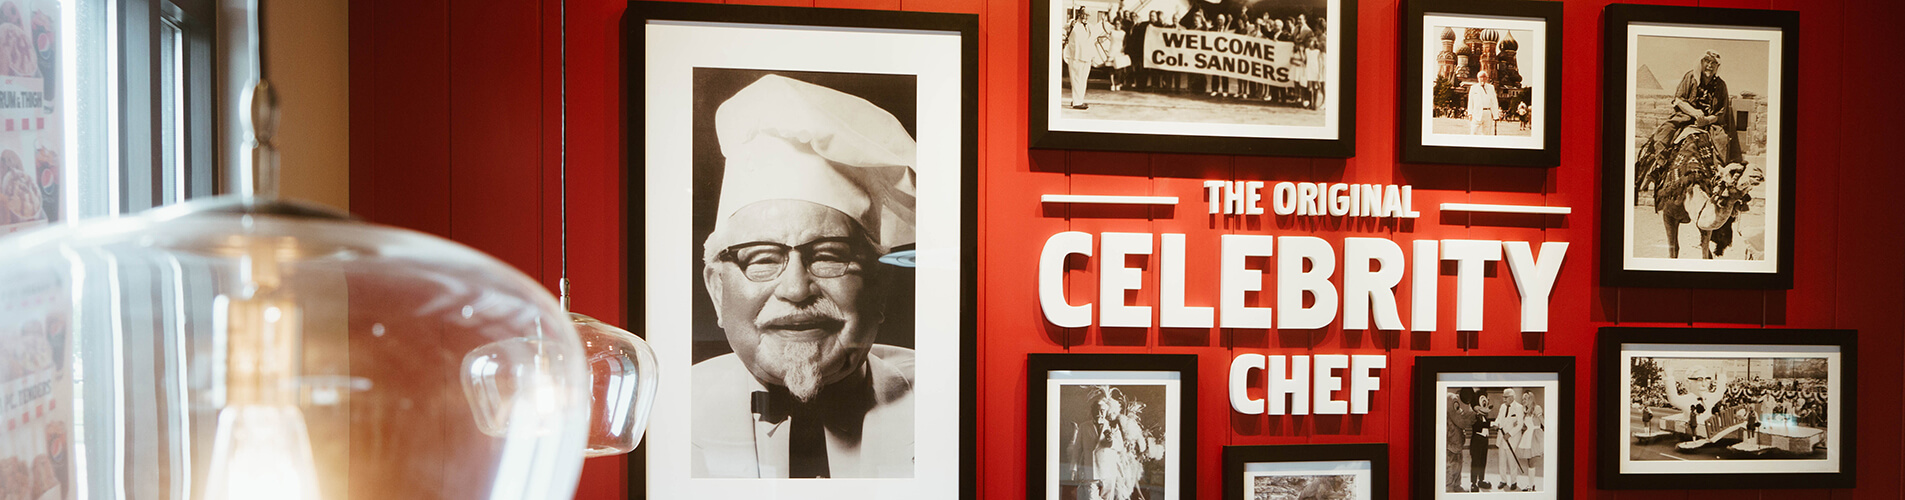 KFC Celebrity Chef wall